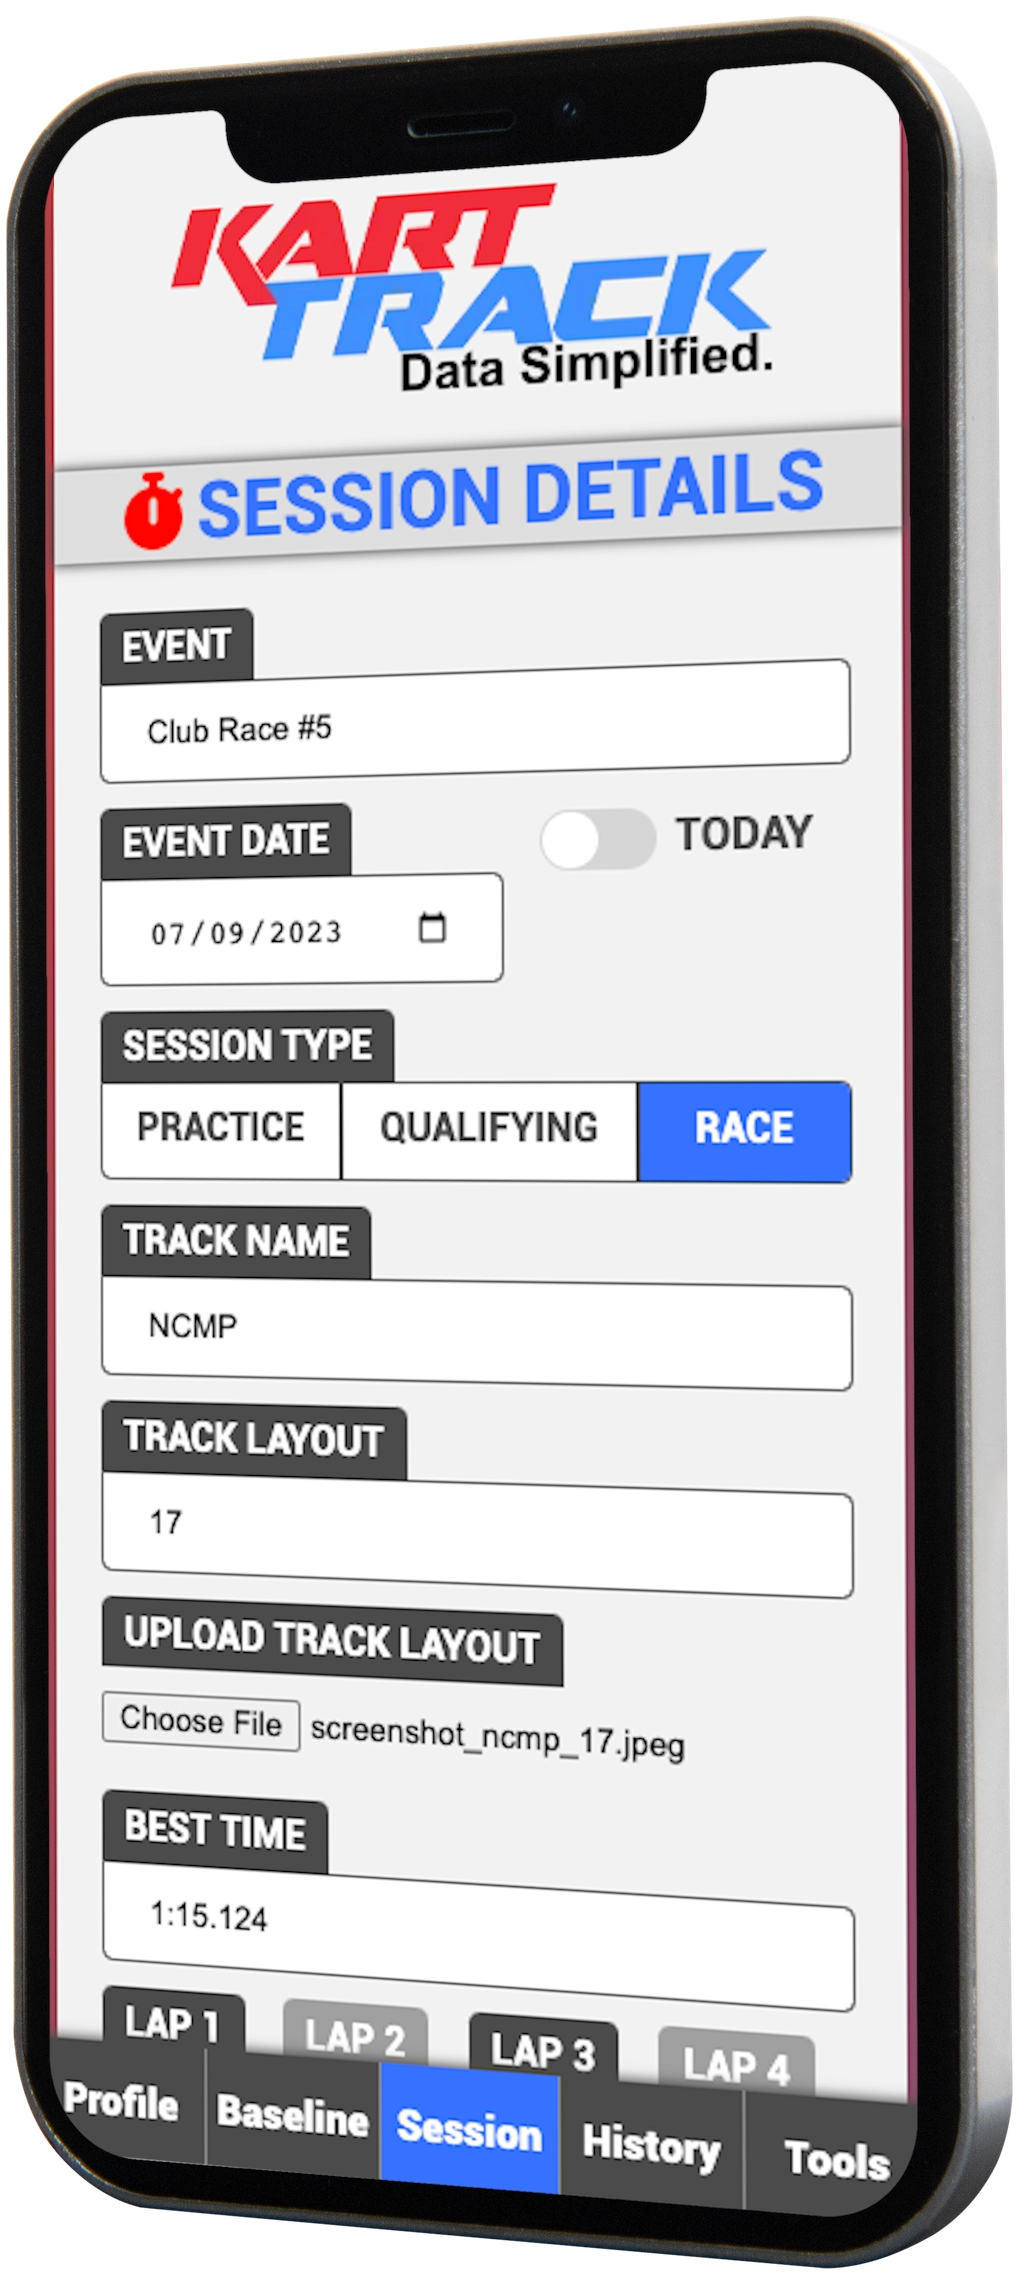 Kart-Track-Phone-Demo